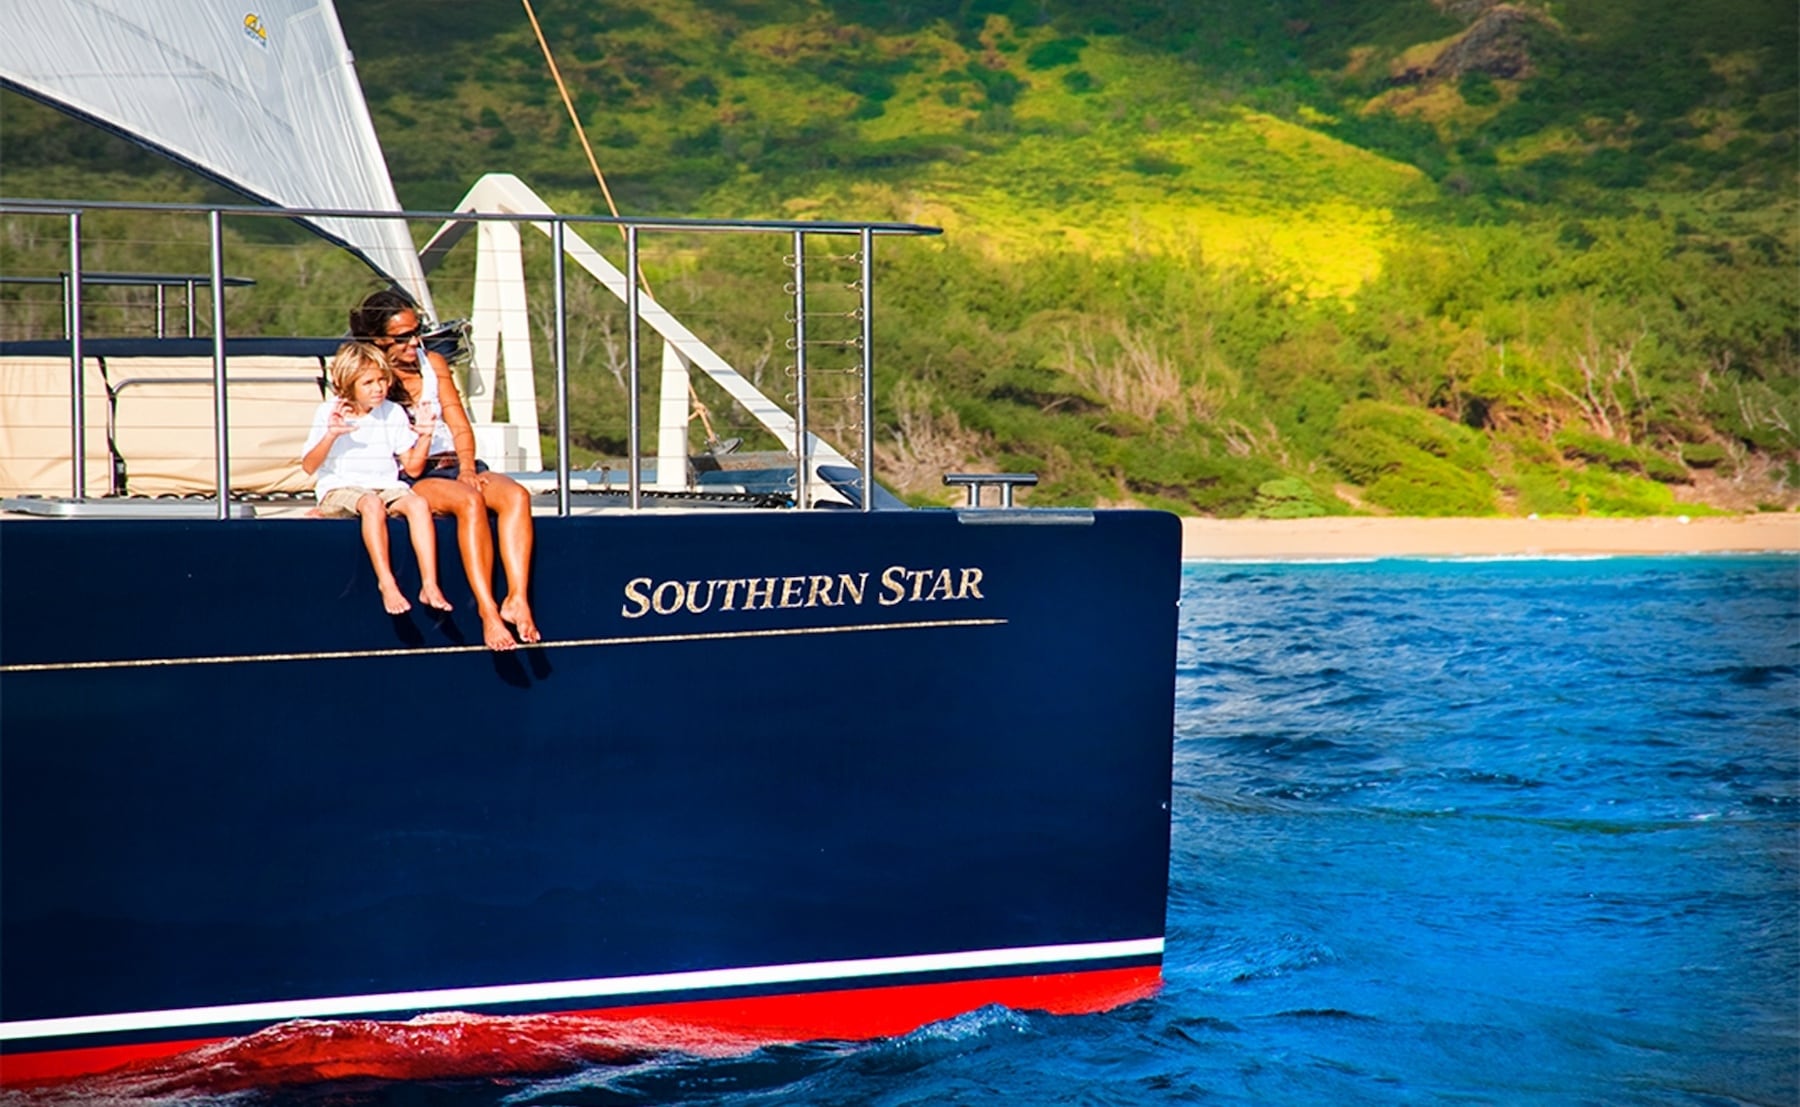 Captain Andy's luxury catamaran, Southern Star, sails near the Na Pali Coast